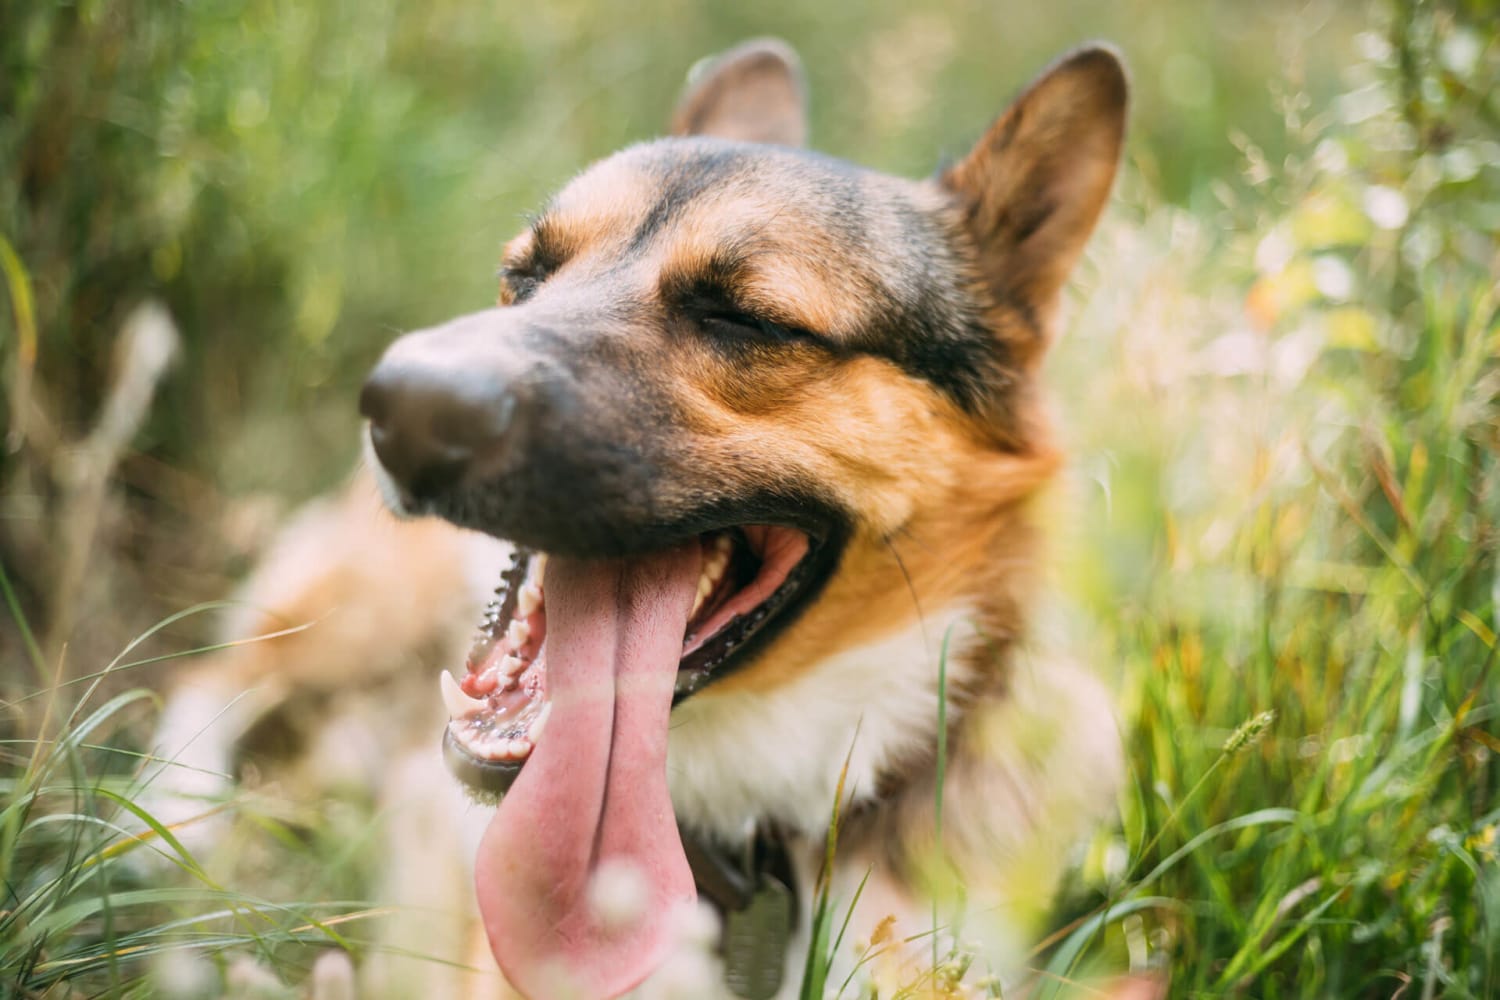 How to Prevent Heatstroke in Dogs